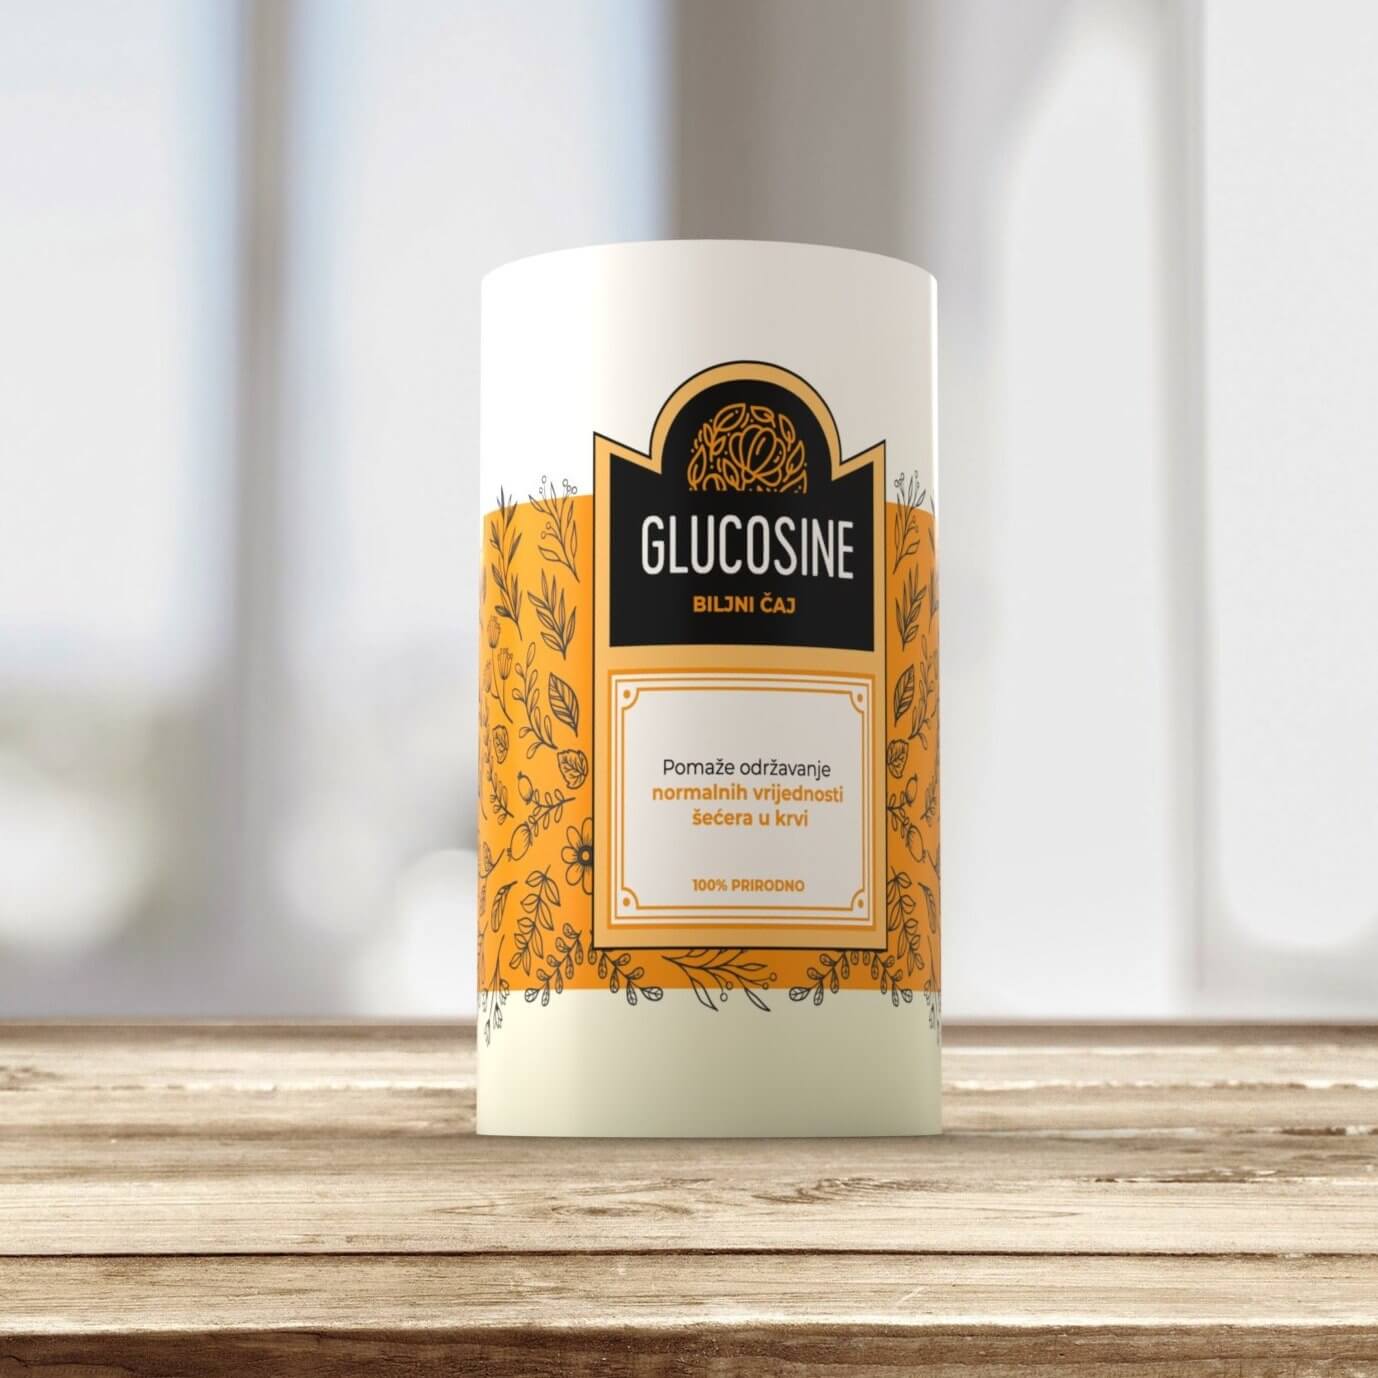 Glucosine